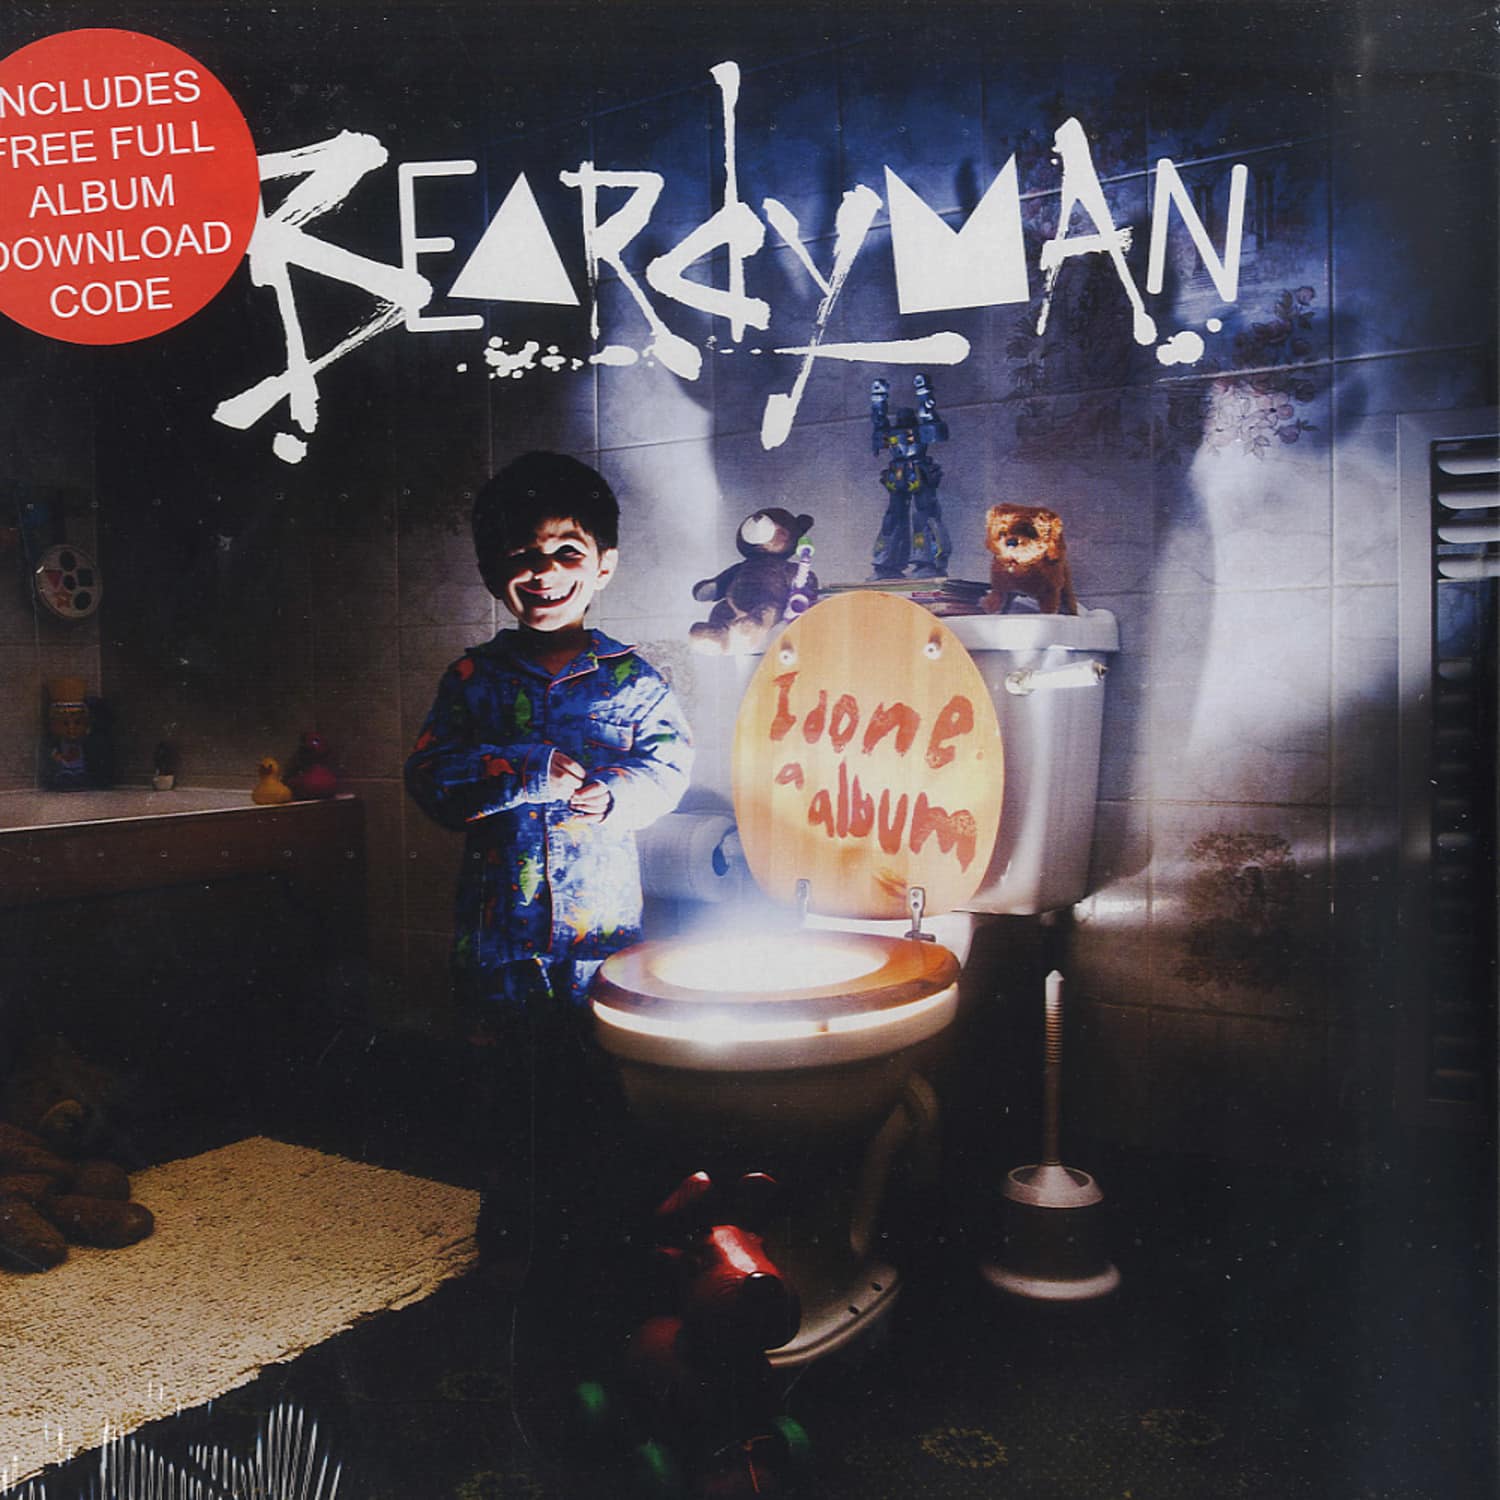 Beardyman - I DONE A ALBUM 